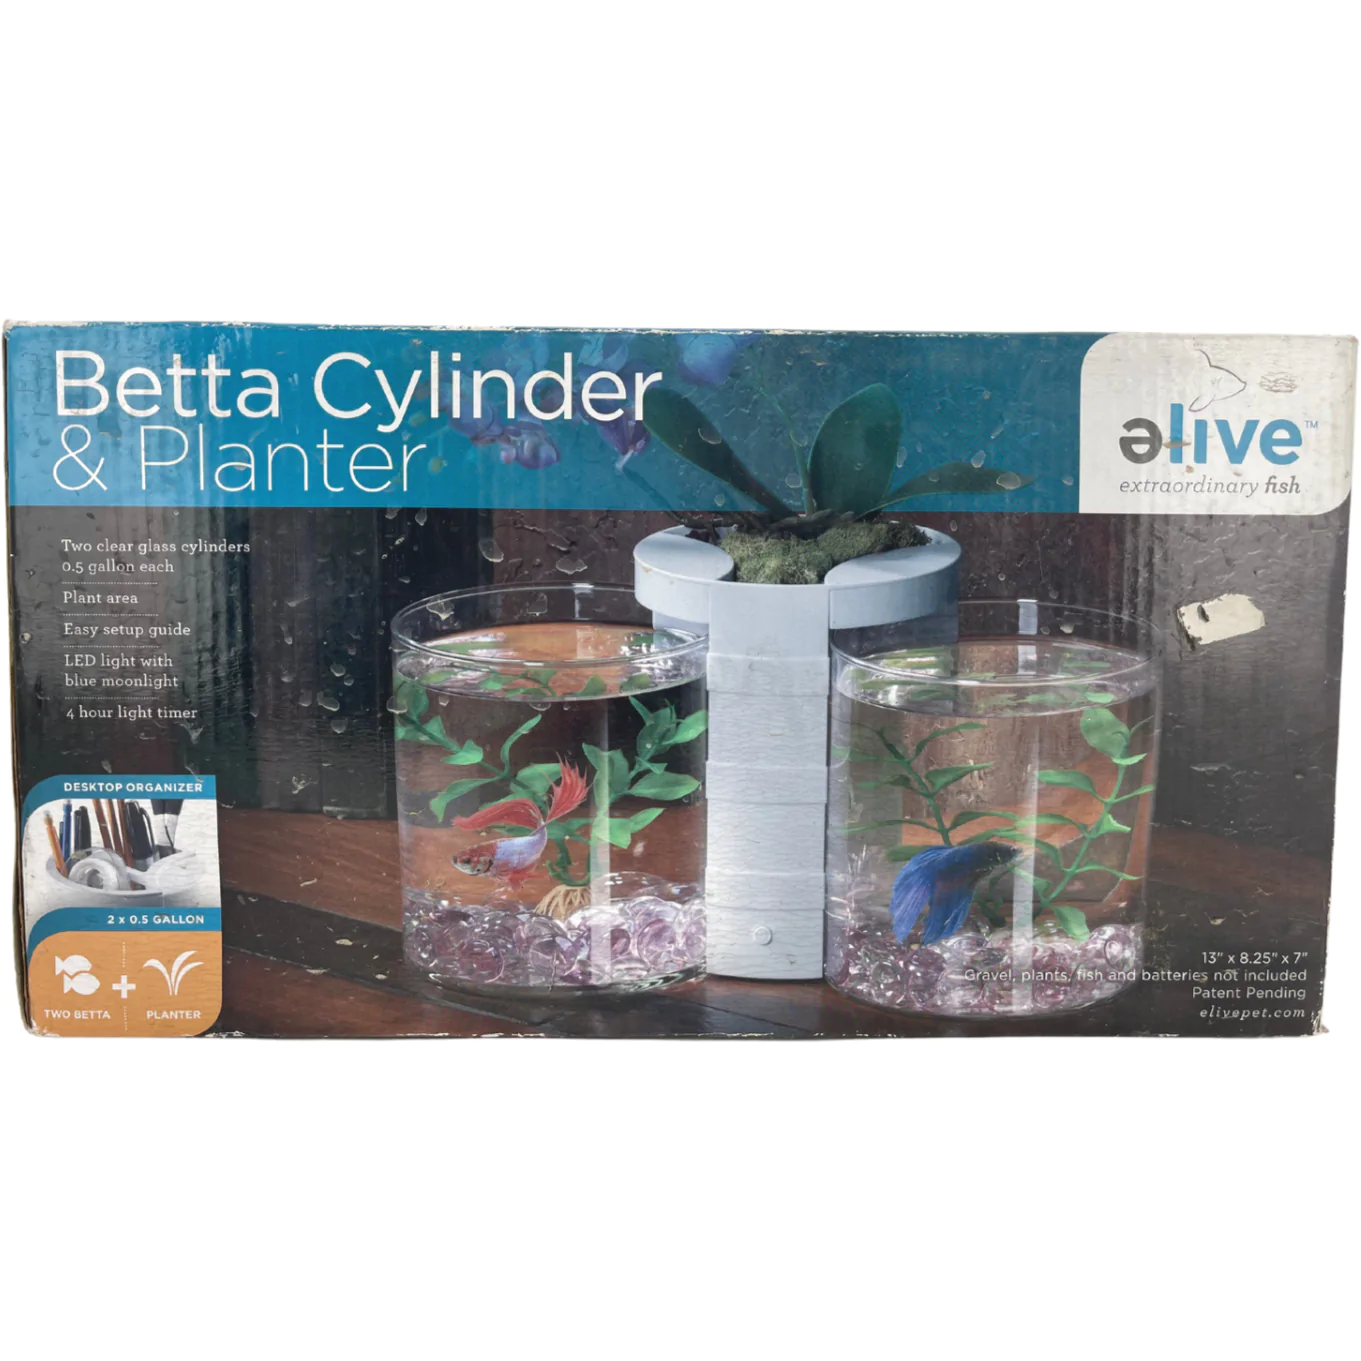 eLive Betta Cylinder & Planter / 0.5 Gal Aquarium / Betta Fish Tank **DEALS**